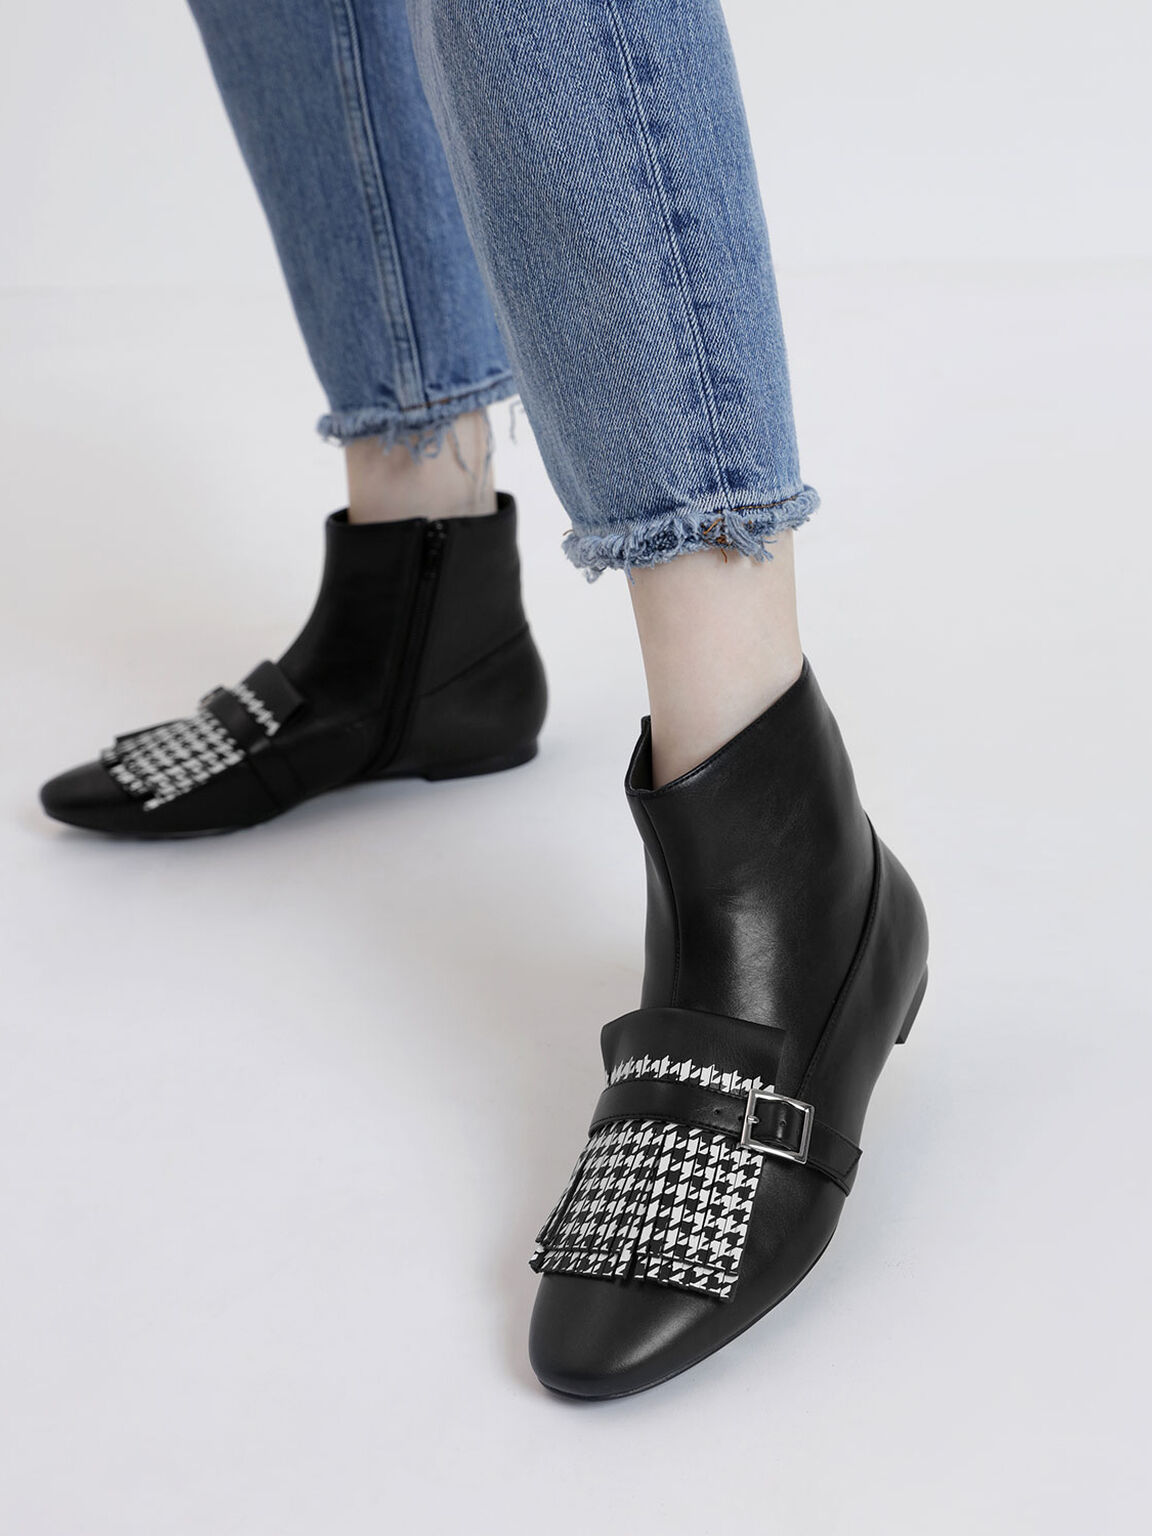 Black Houndstooth Printed Fringe Flat Ankle Boots